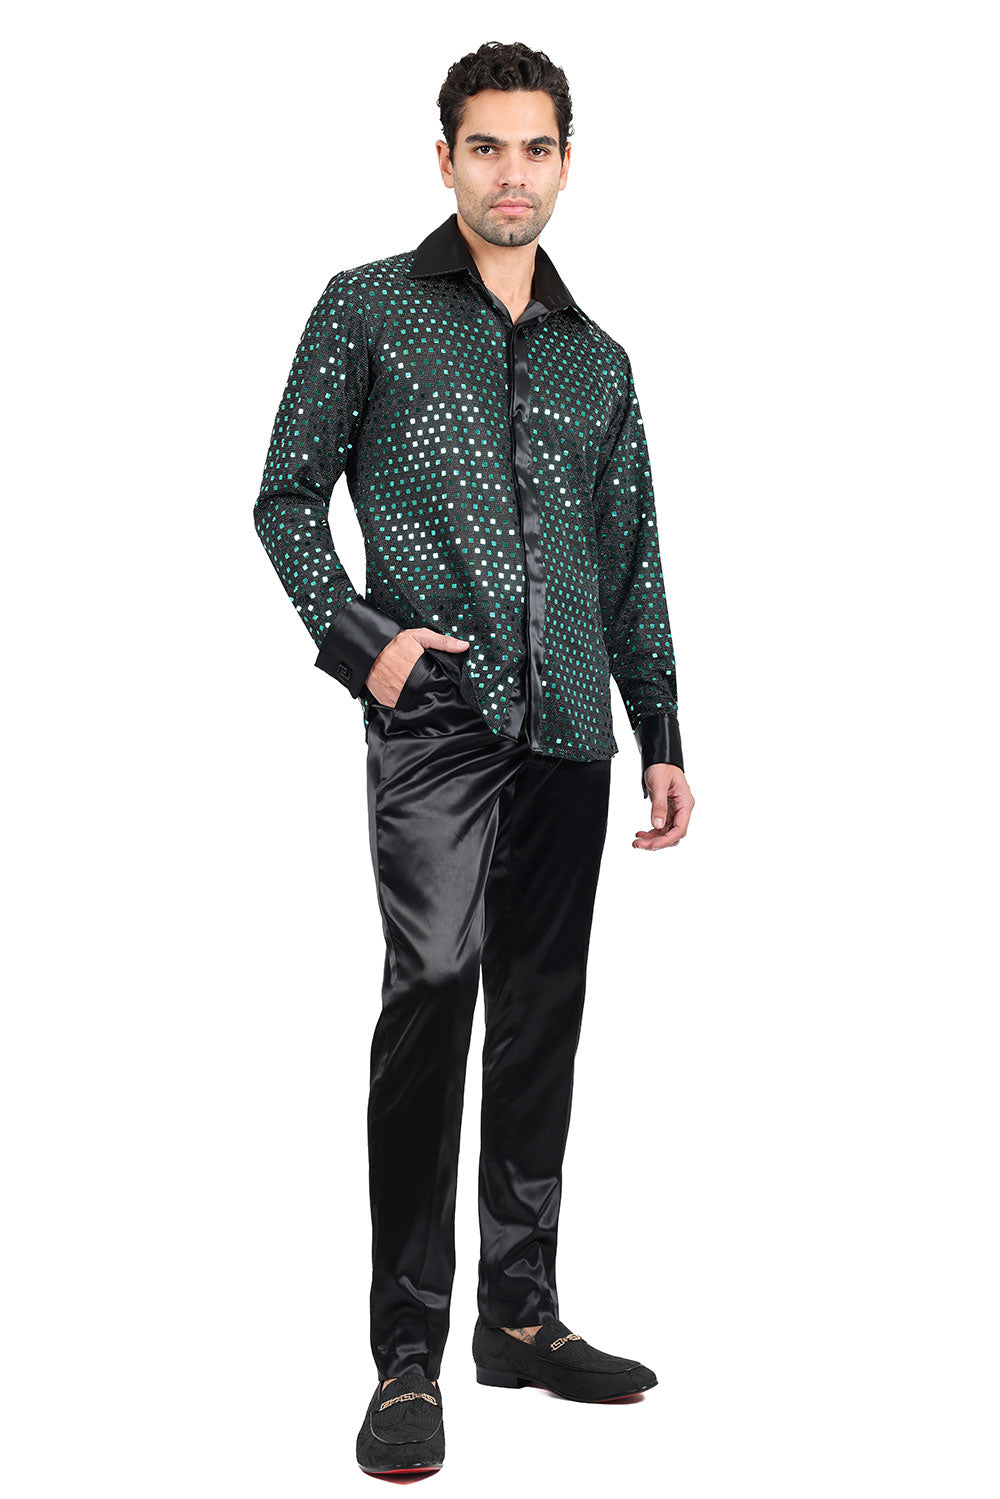 Barabas Men's French Cuff Glittery Sparkly Striped Shirt 2FCS1007 Emerald